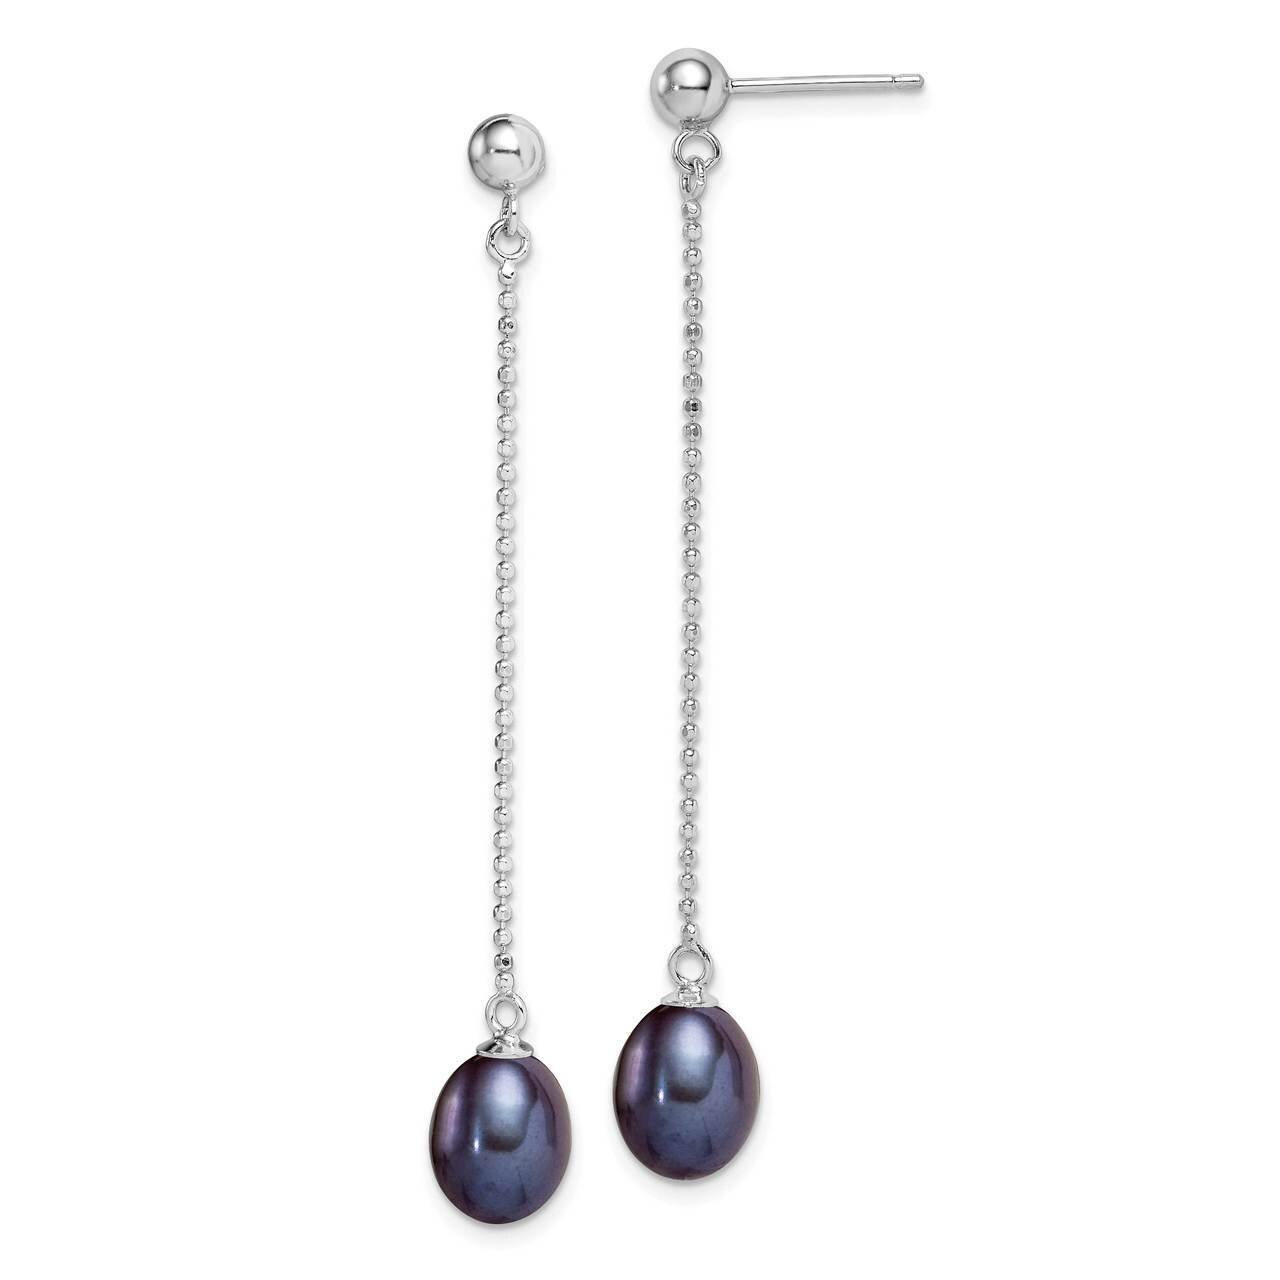 7-8mm Freshwater Cultured Black Pearls Post Dangle Earrings Sterling Silver QE15052